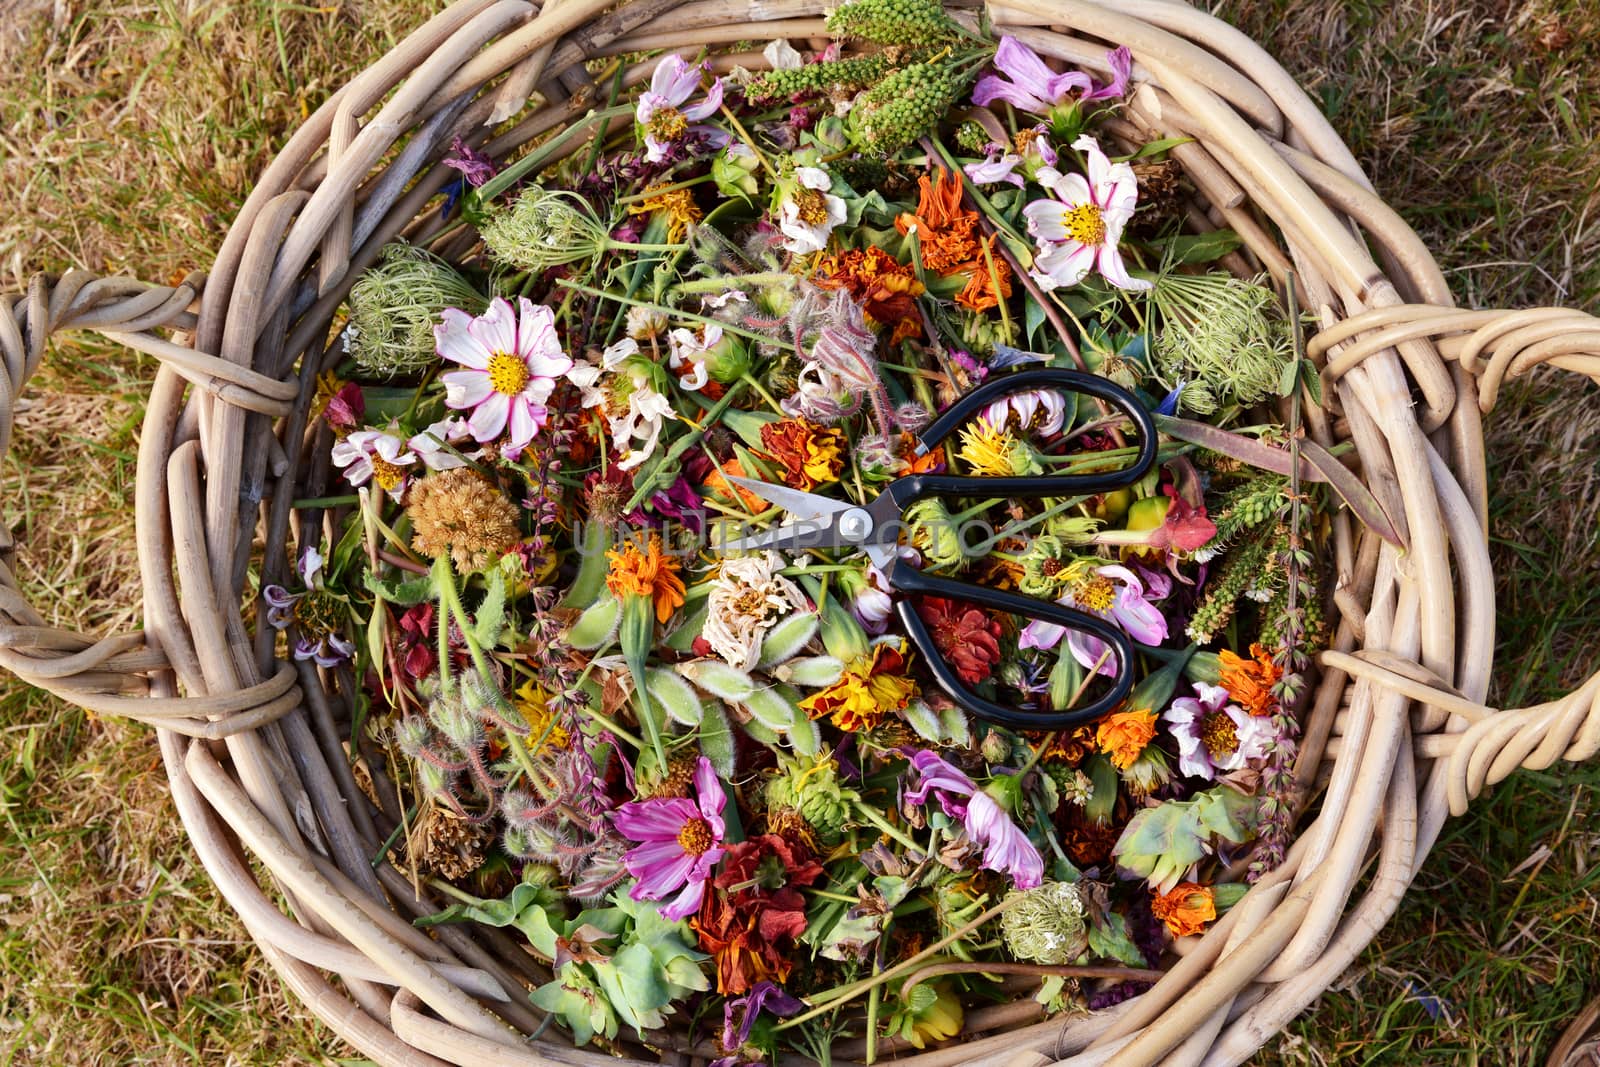 Woven basket full of deadheaded flowers and seedcases with gardener's scissors, from above